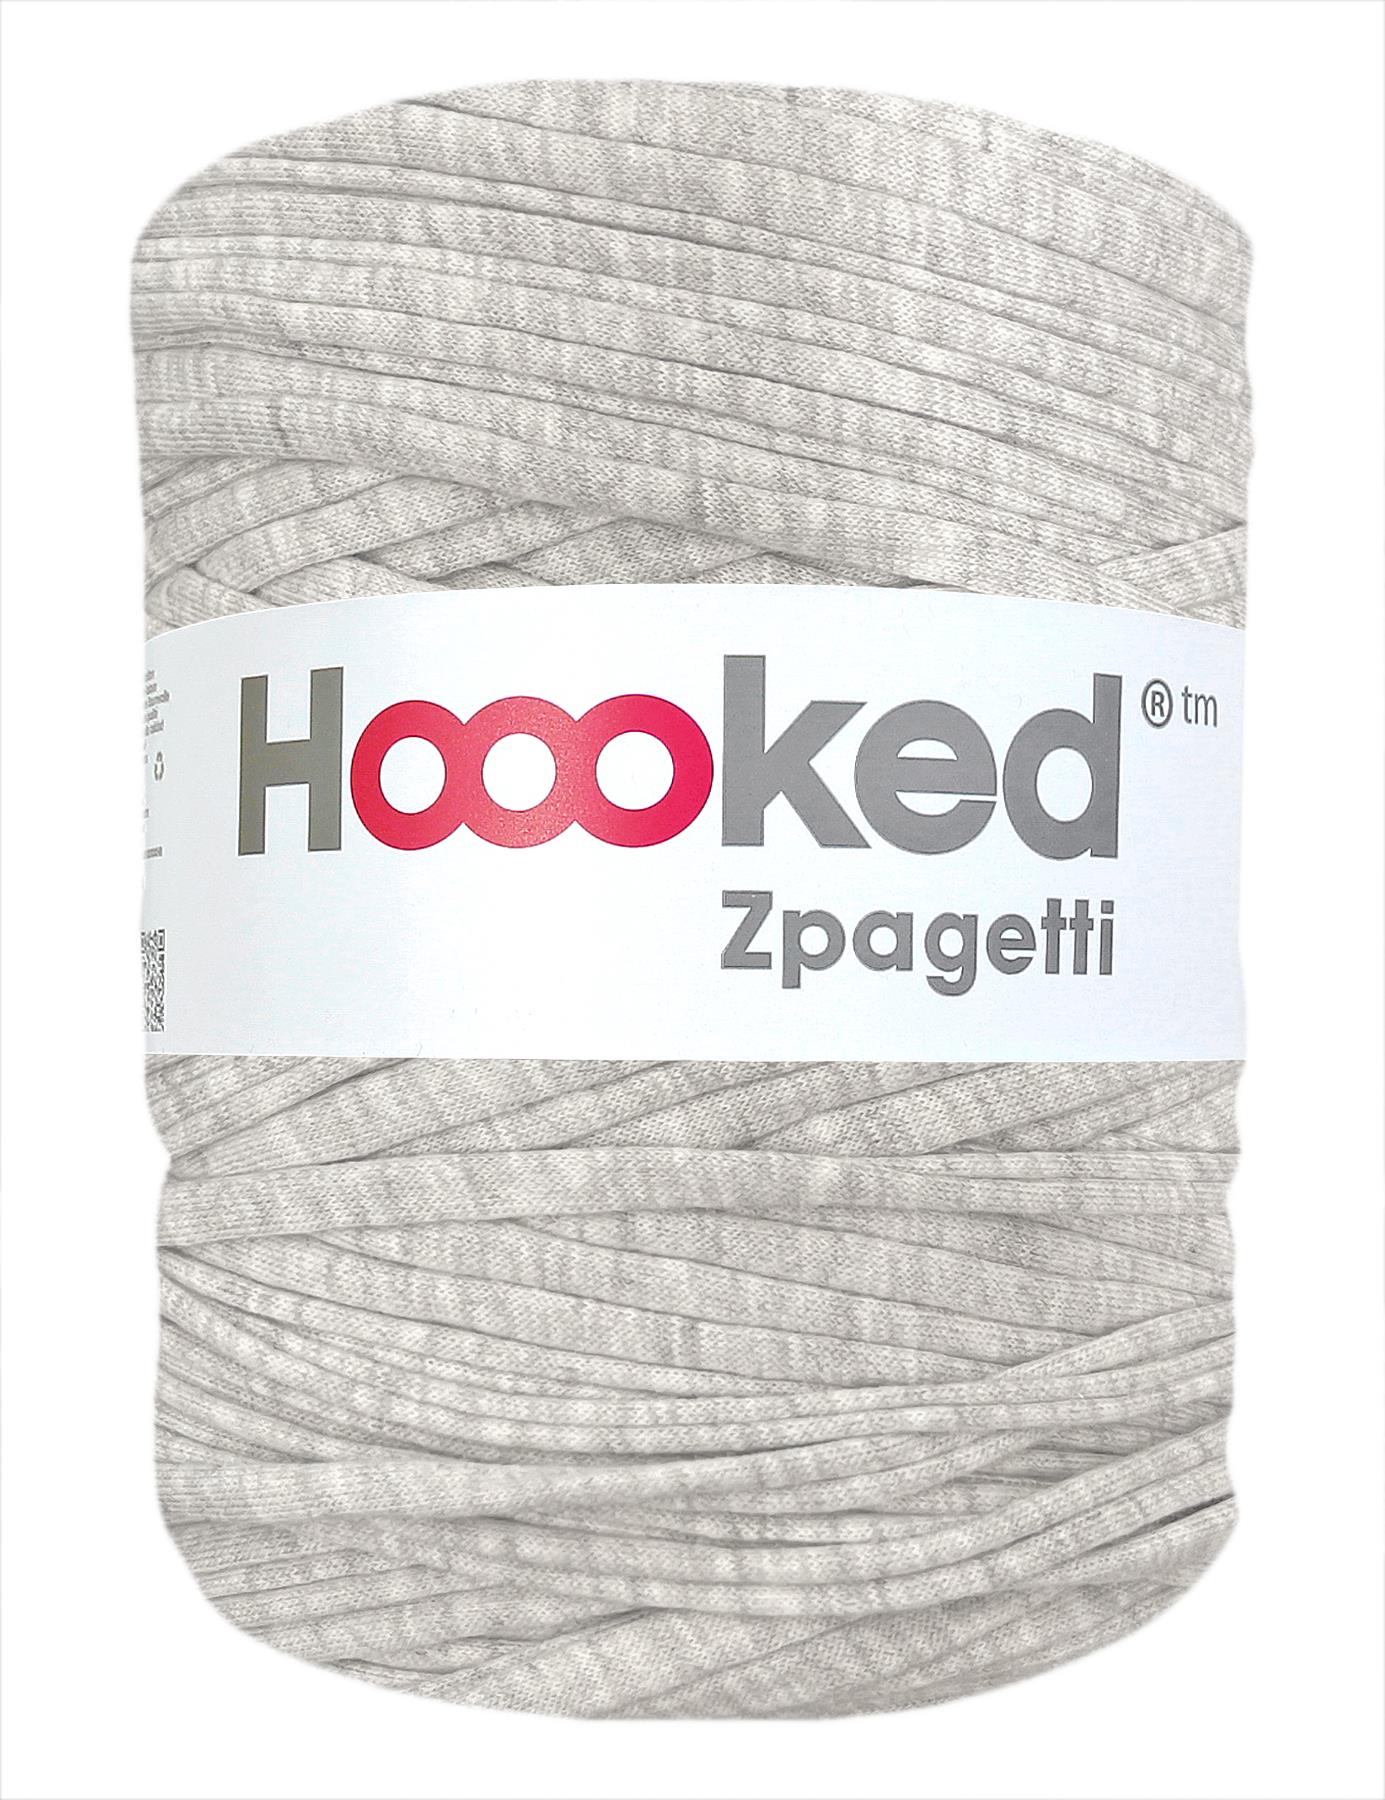 Light cloud grey t-shirt yarn by Hoooked Zpagetti (100-120m)